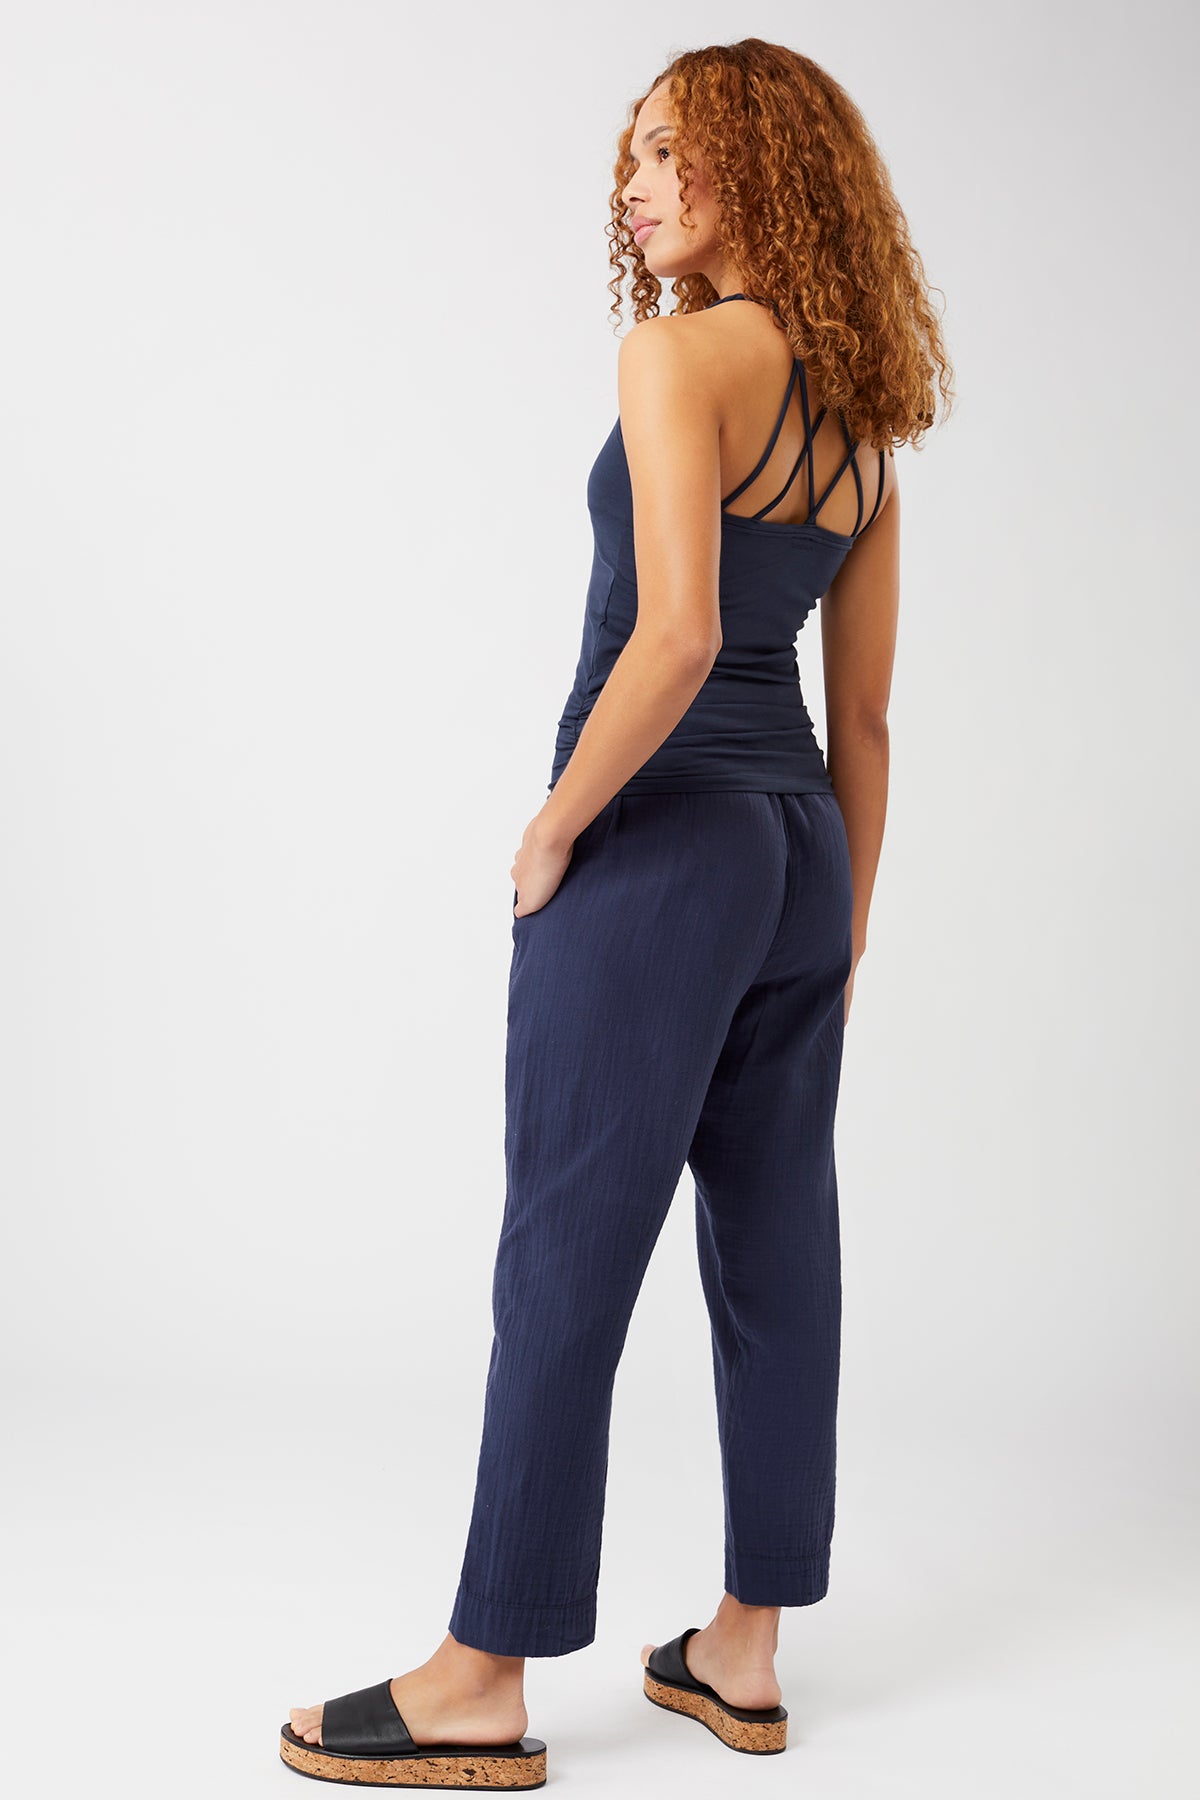 Mandala Yoga Pant Blau Outfit Rückseite - Track Pants